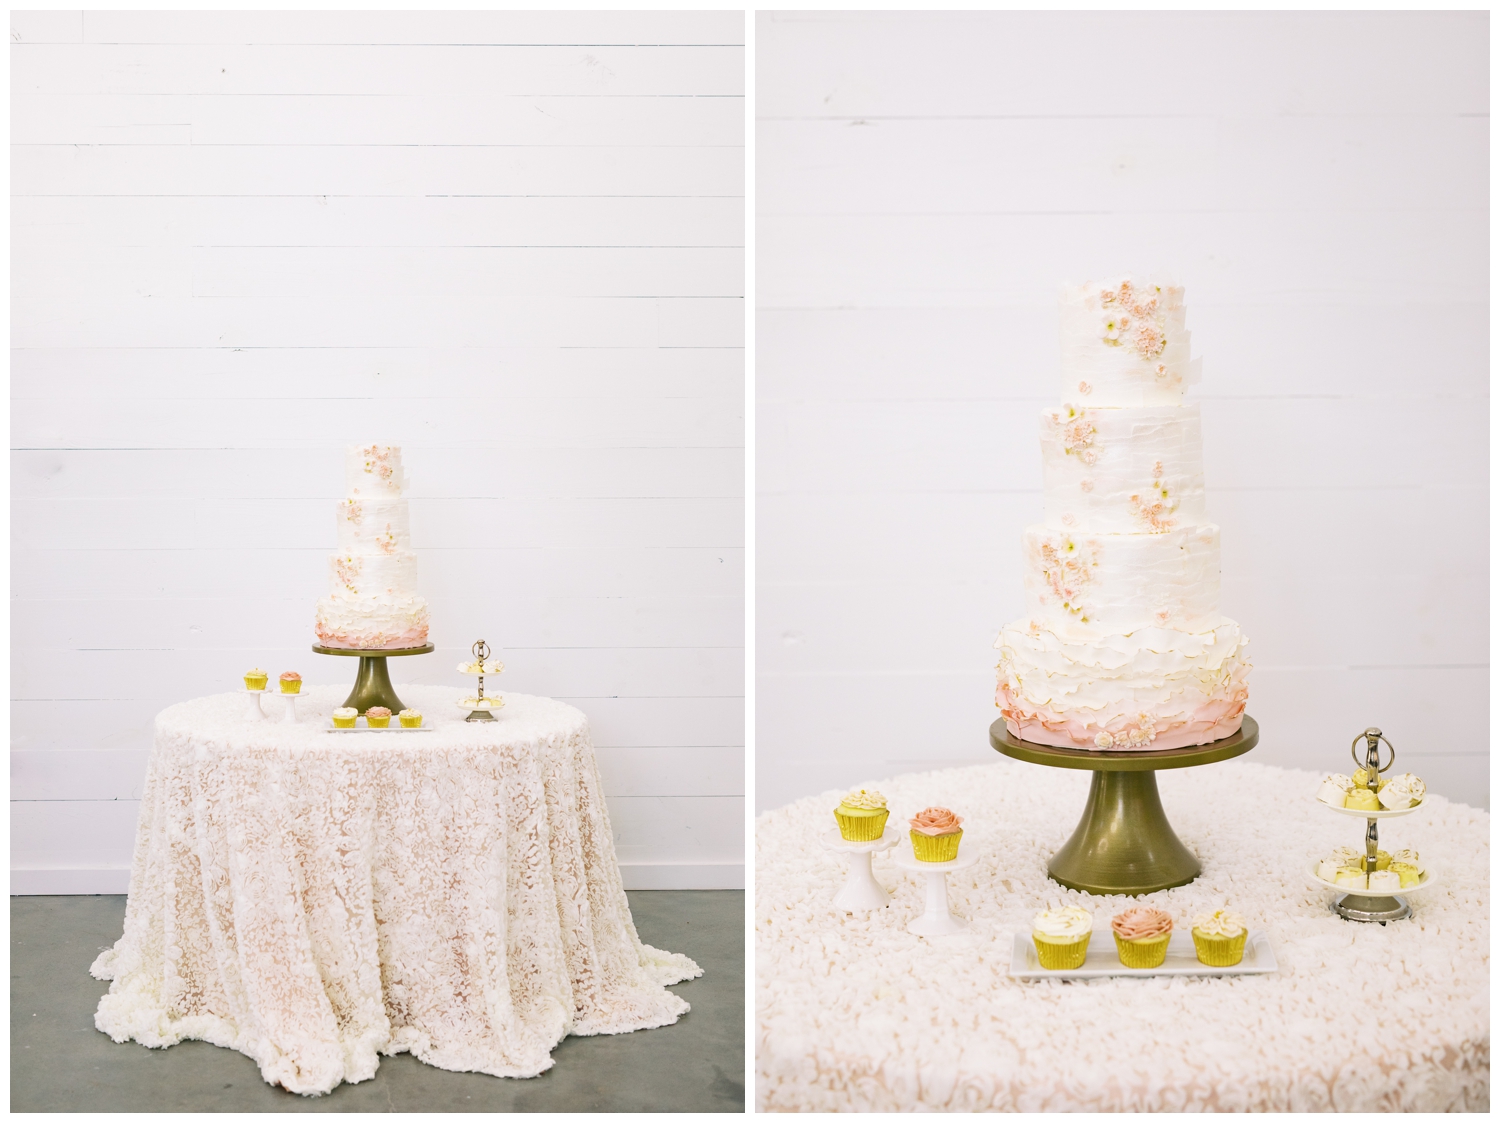 wedding cake and dessert inspiration at wedding venue Addison Woods outside Houston Texas